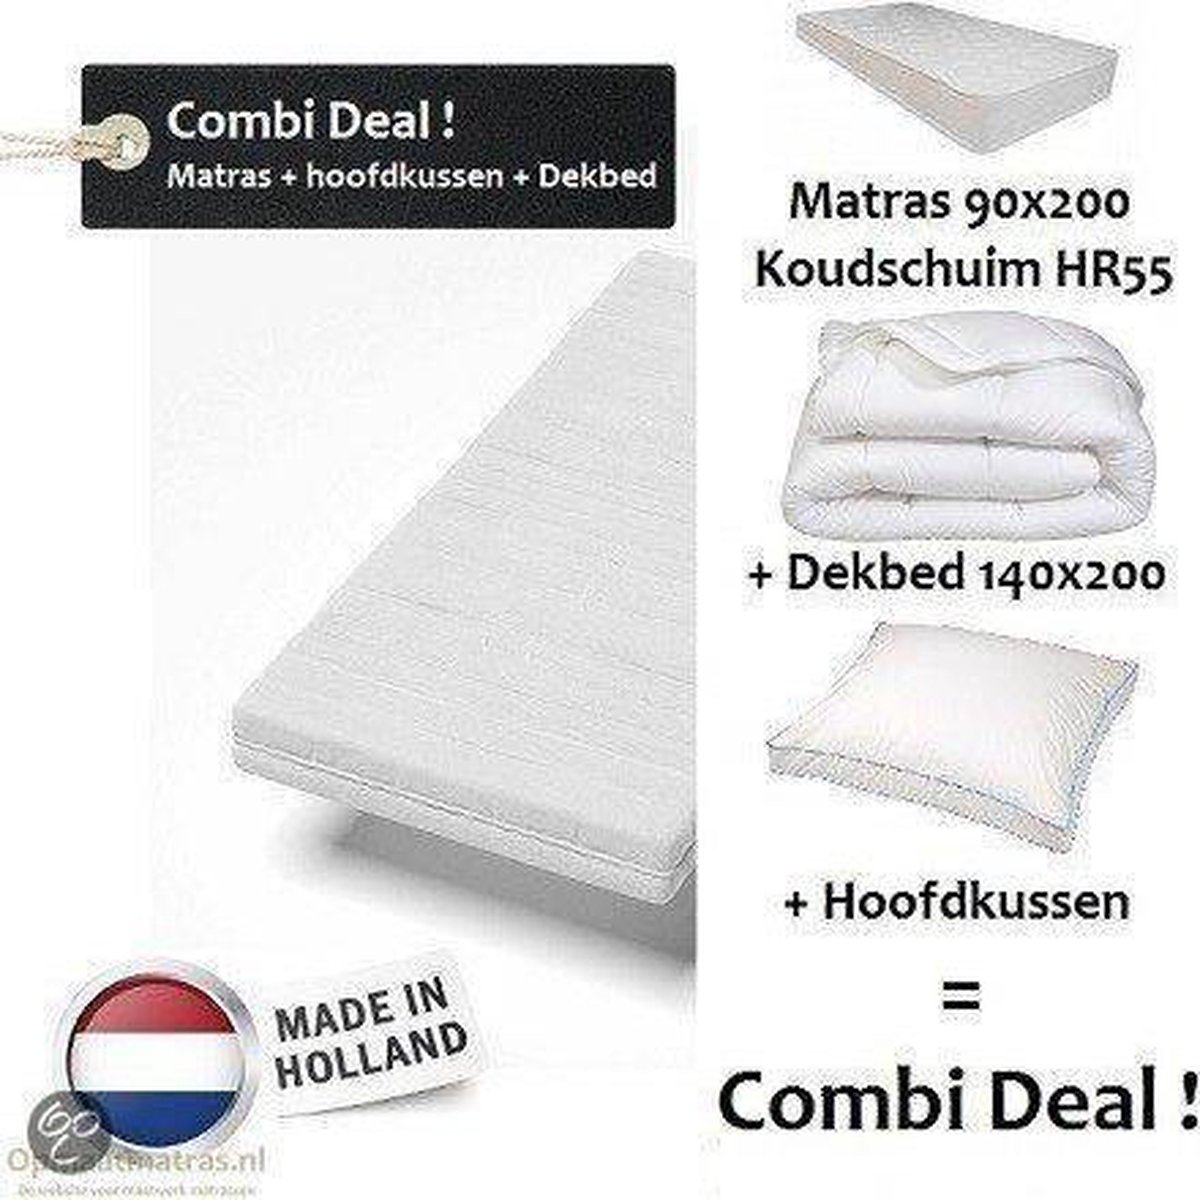 Combi Deal! Matras 90x200 HR55 + Dekbed 240x200 + Hoofdkussen | bol.com